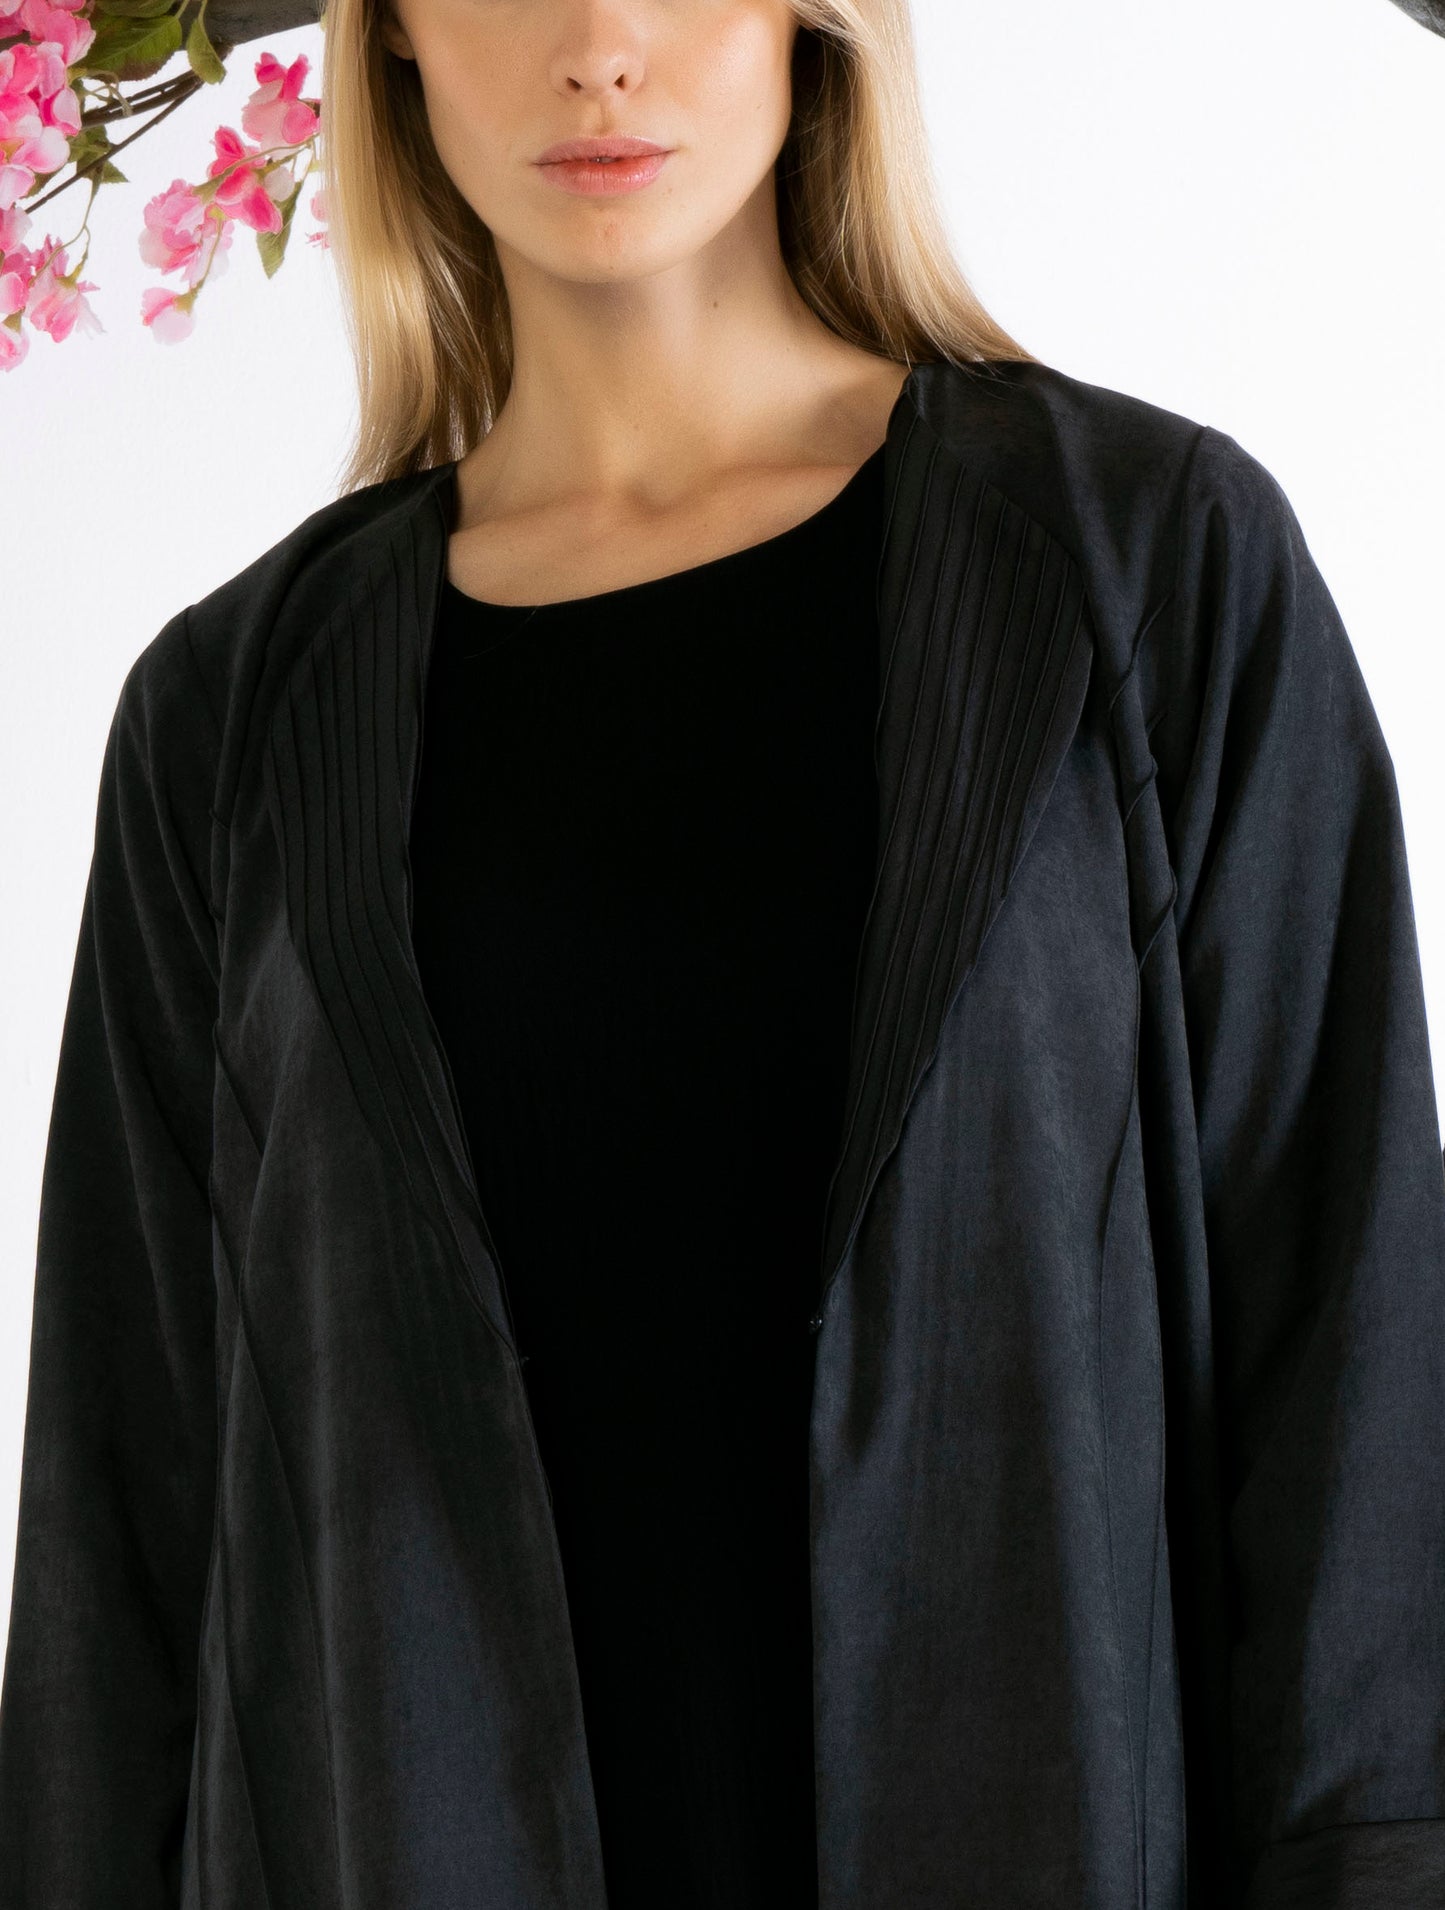 Stylised Black Collar Abaya With Pintex Design Detailing